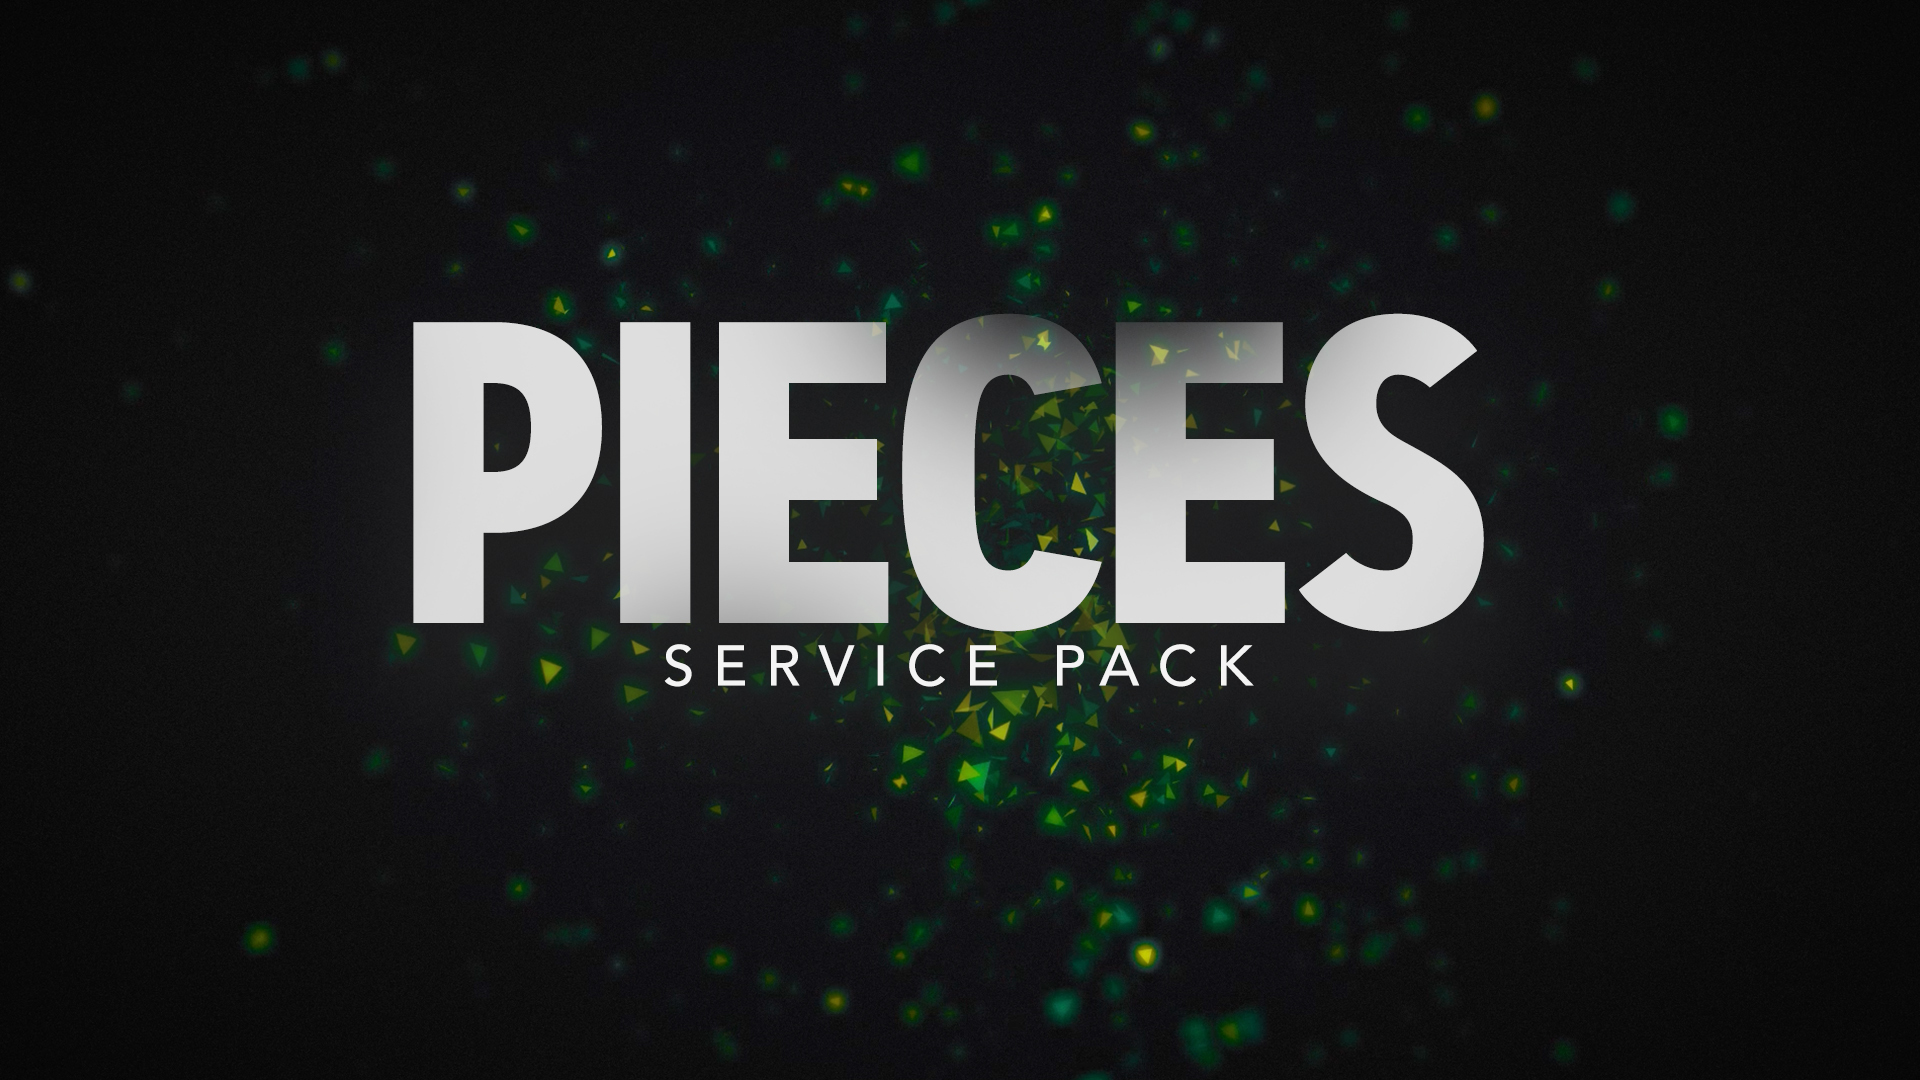 Pieces Service Pack